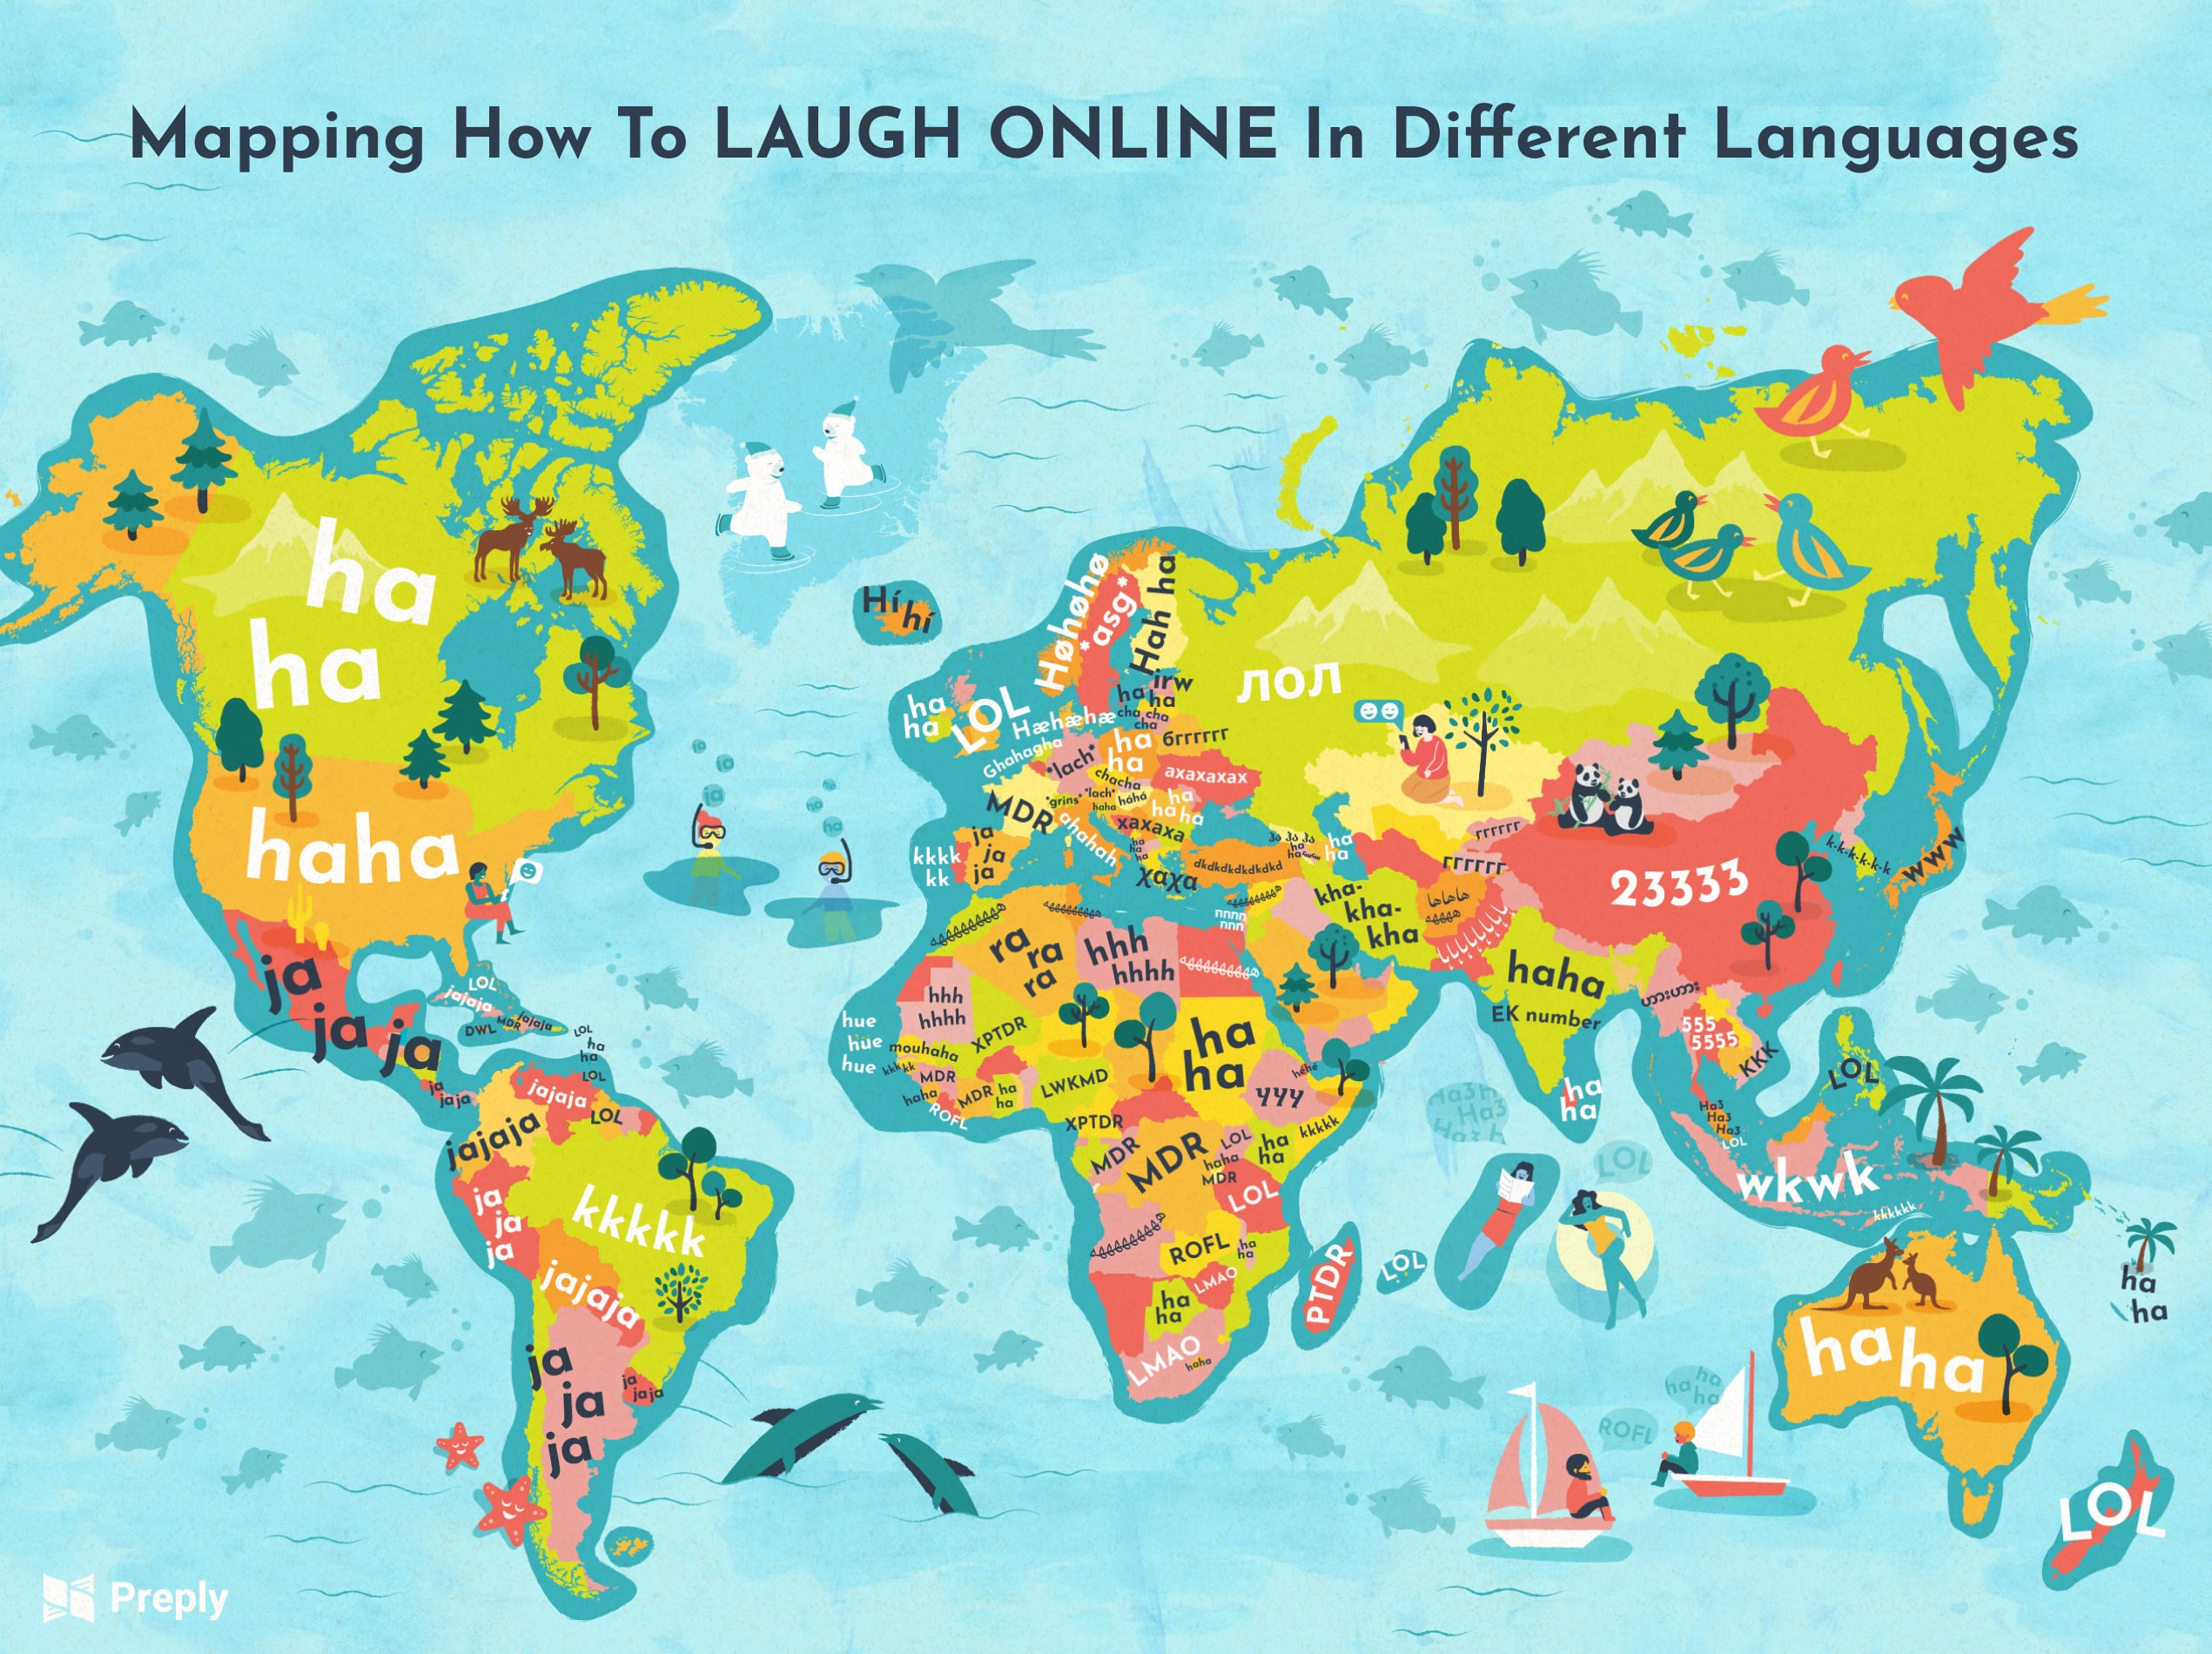 Lol, jaja, xaxa, and all the ways people laugh around the world - Big Think